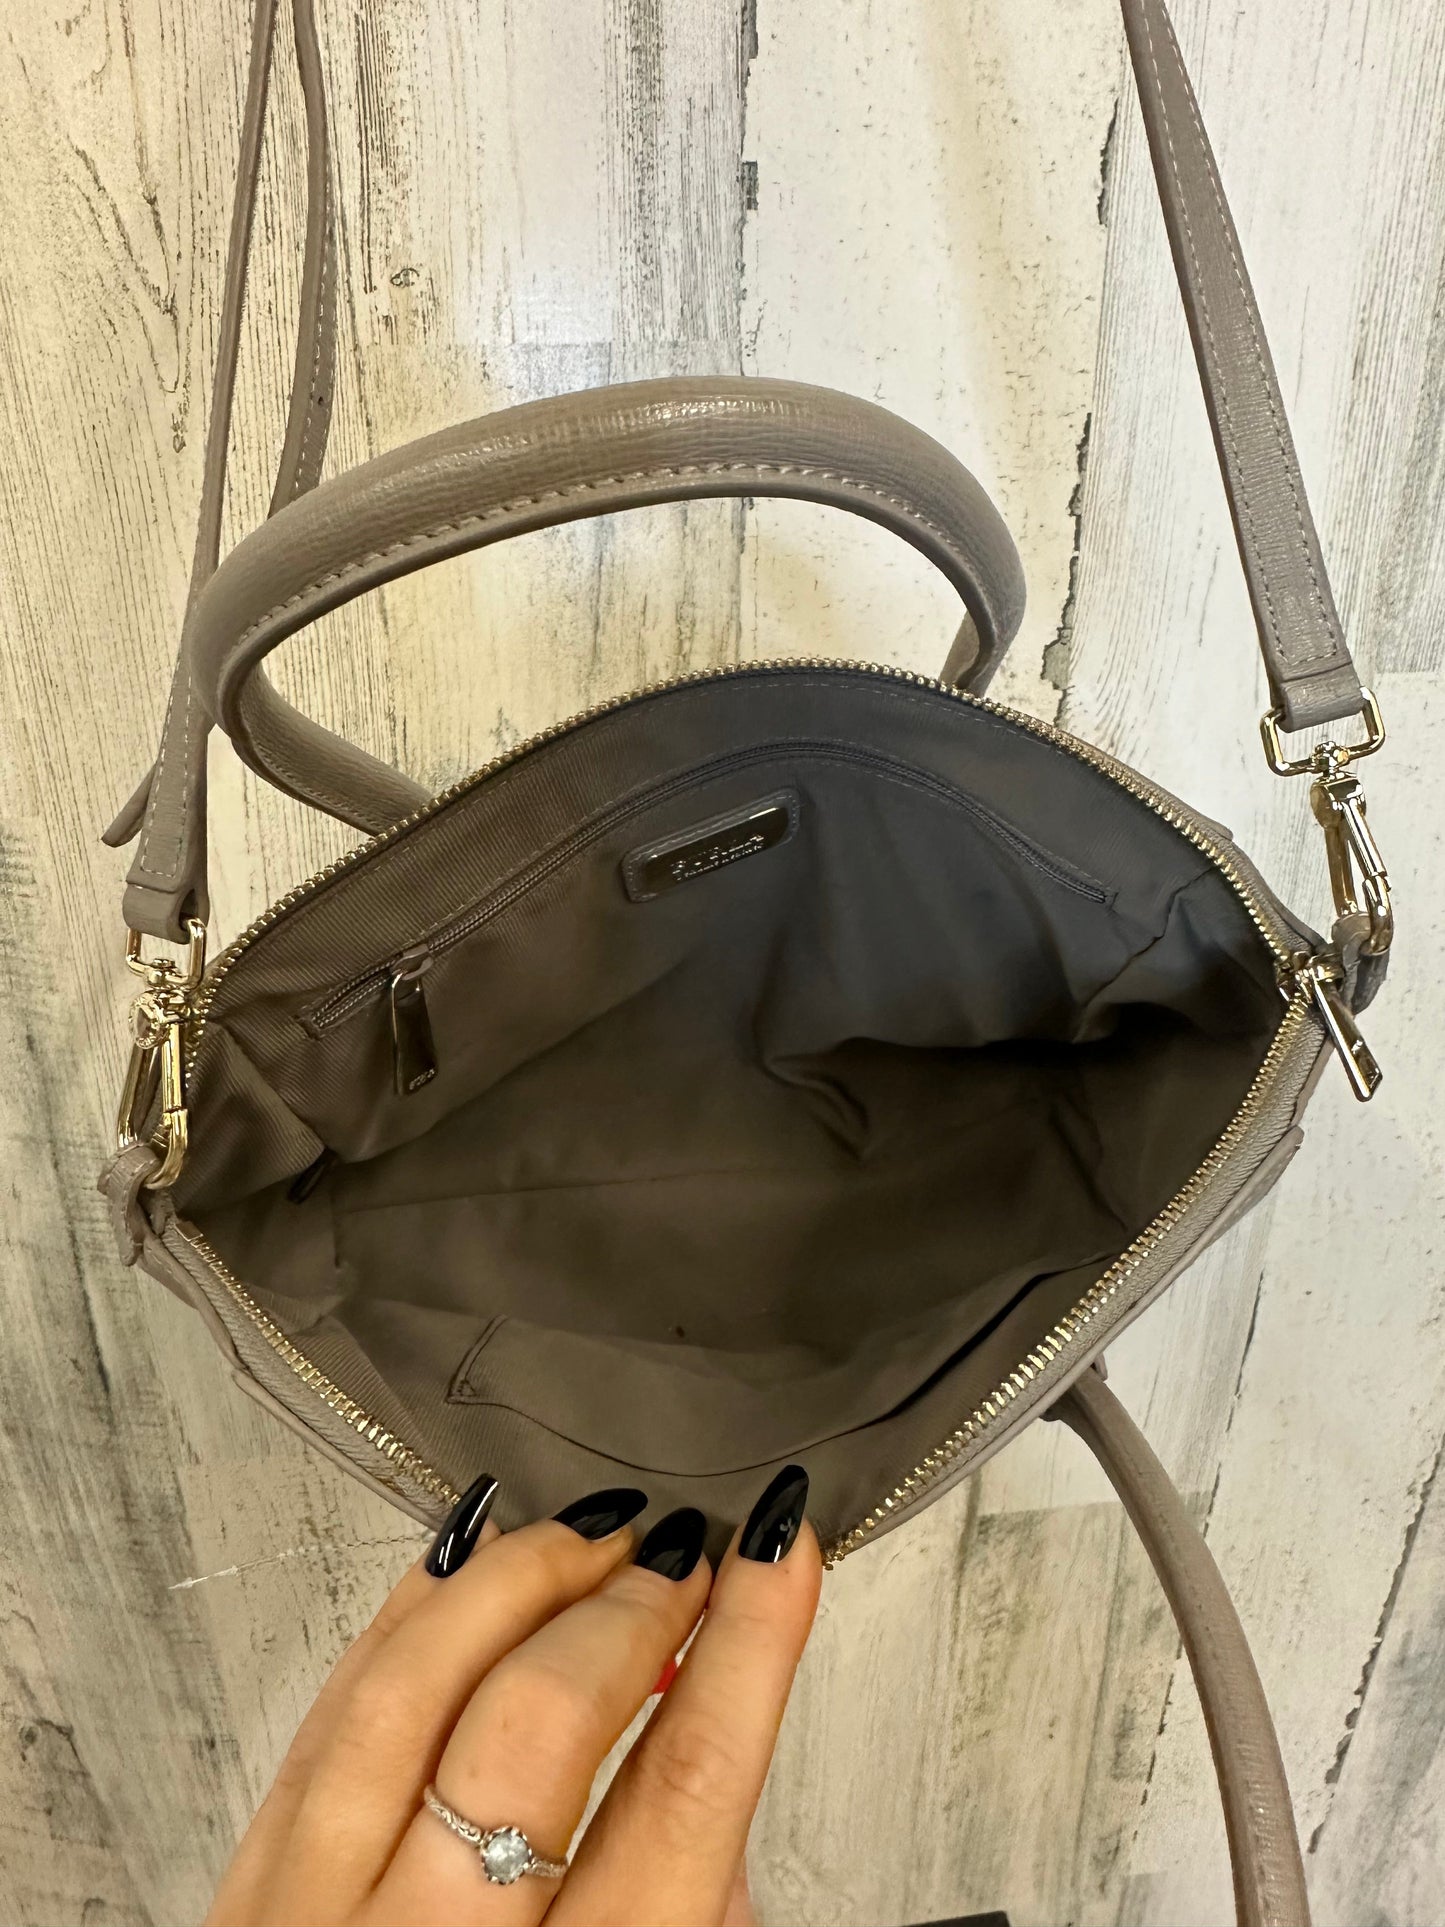 Handbag Designer By Furla  Size: Medium